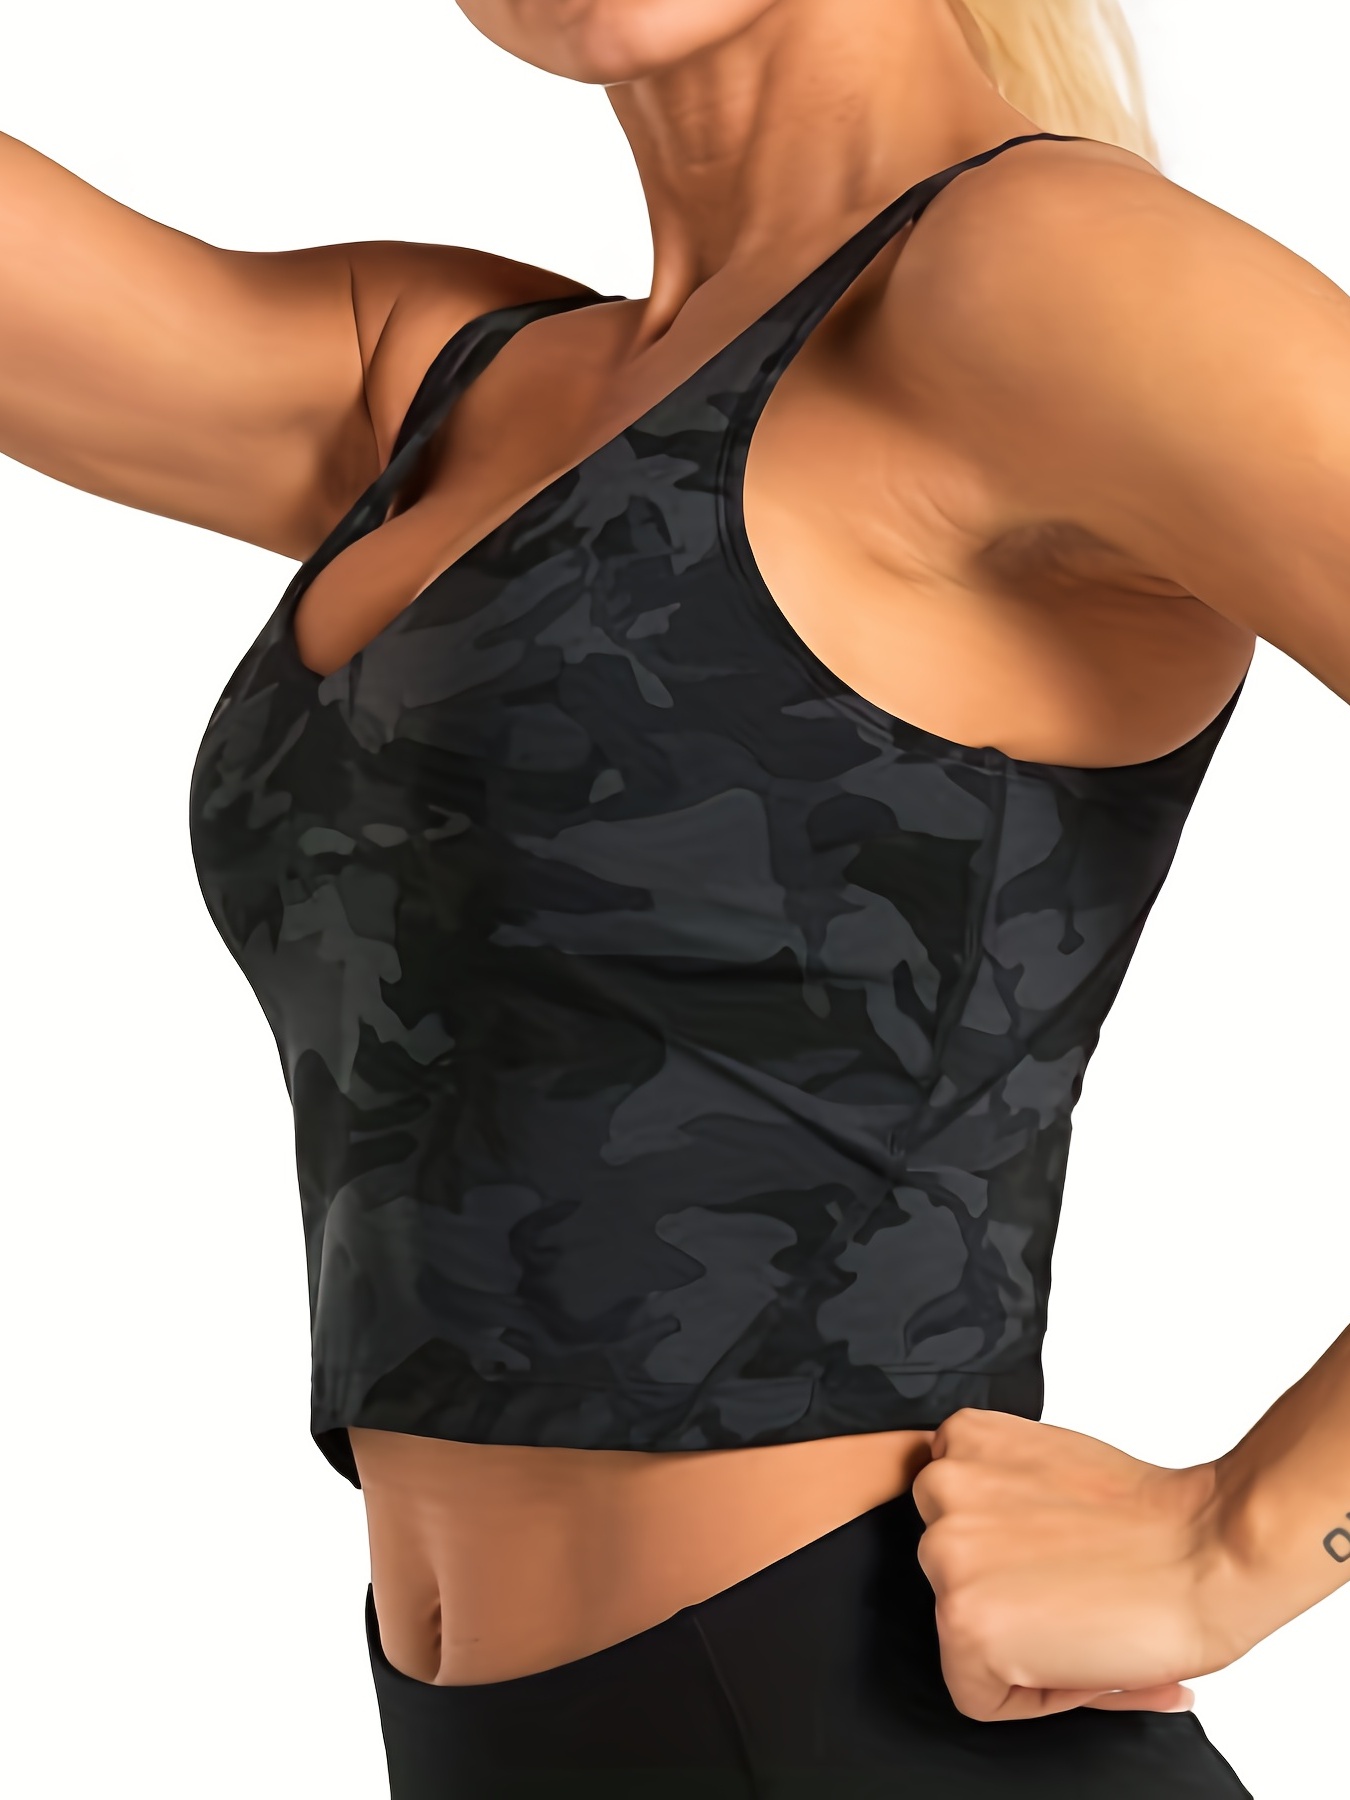 NanoEdge Present Women?s Longline Sports Bra Wirefree Padded Medium Support  Yoga Bras for Running Workout Tank Tops Size (30 Till 34)